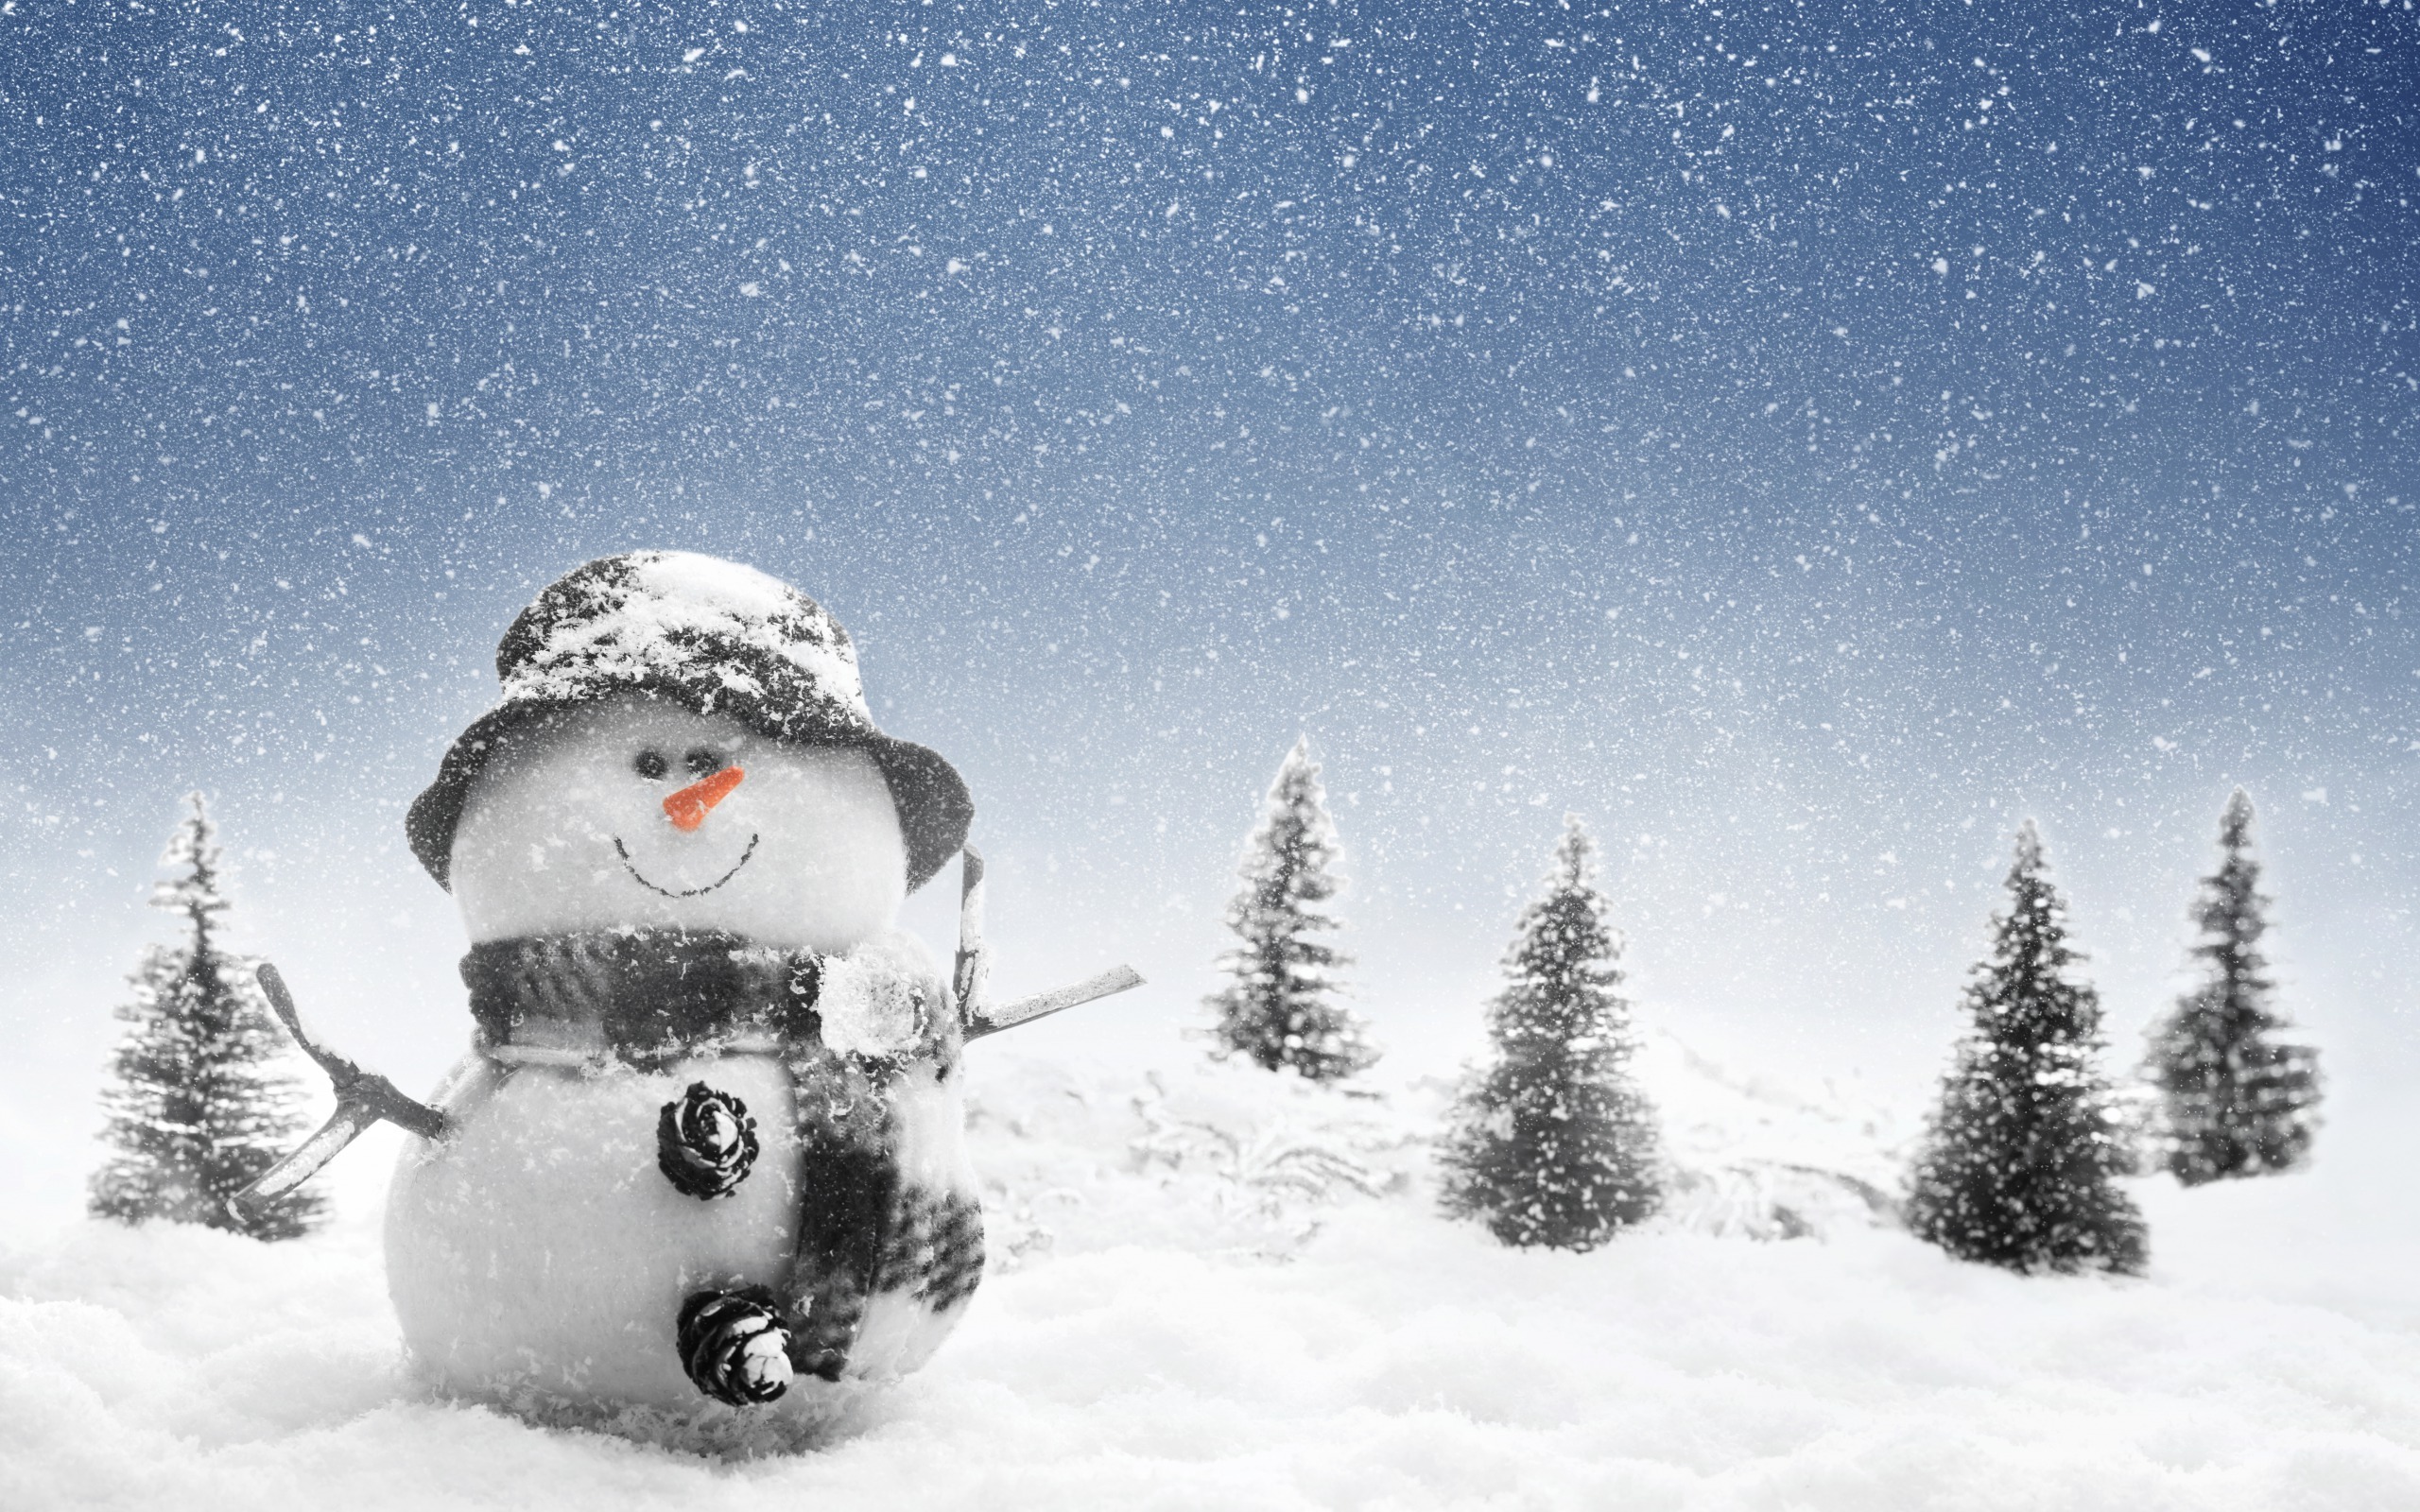 Snowman Wallpaper In Winter Of Christmas